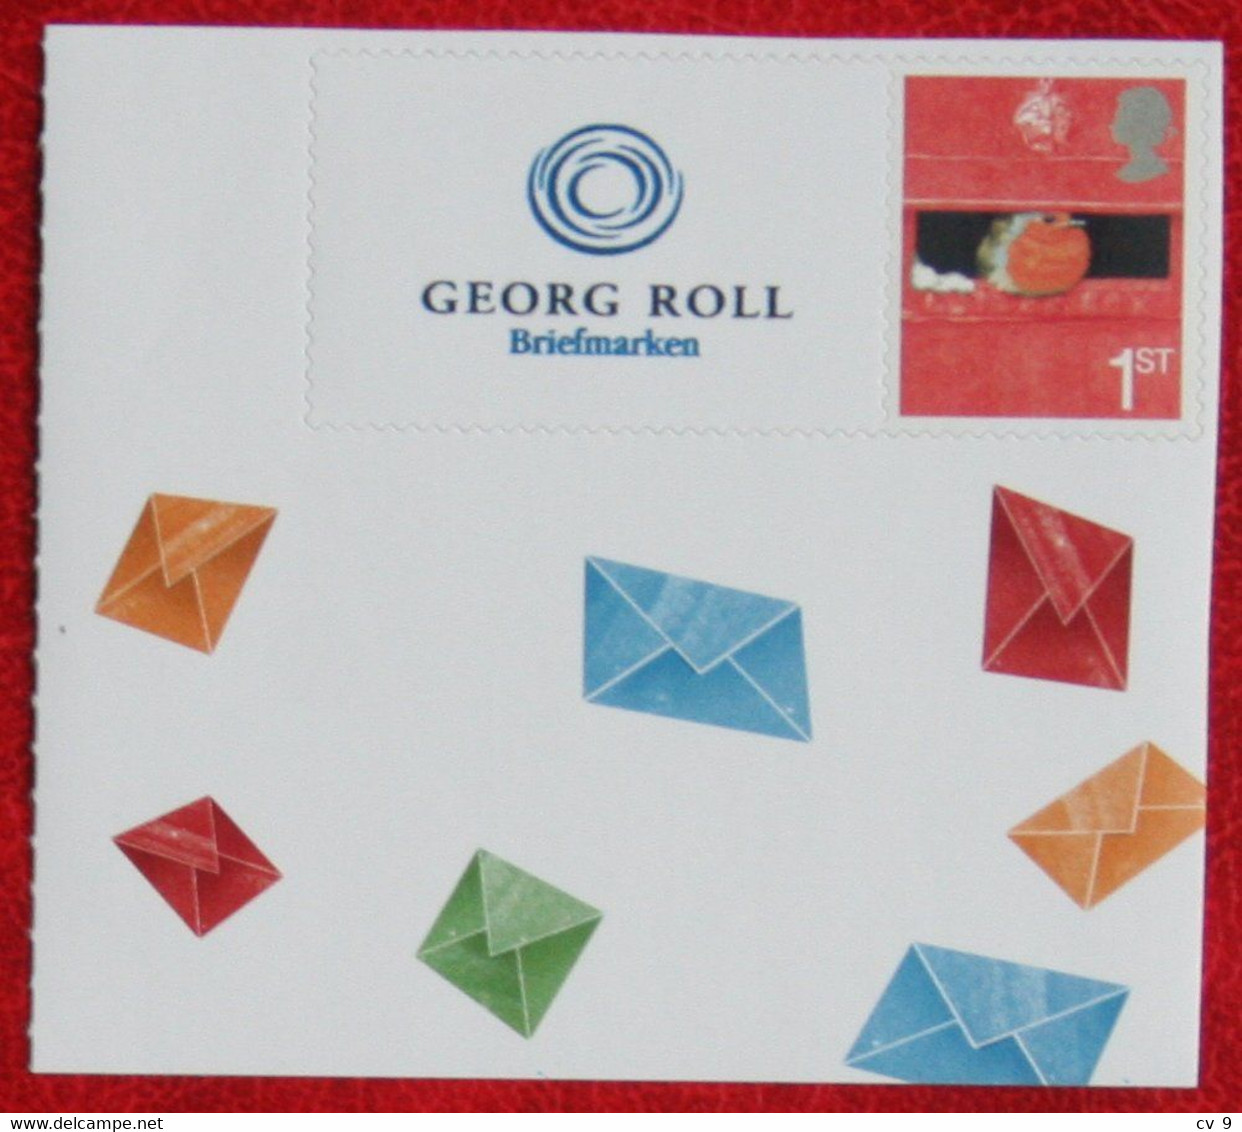 Smiler Smilers Personal Stamp Georg Roll Briefmarken ROBIN Bird POSTFRIS MNH ** ENGLAND GRANDE-BRETAGNE GB GREAT BRITAIN - Francobolli Personalizzati